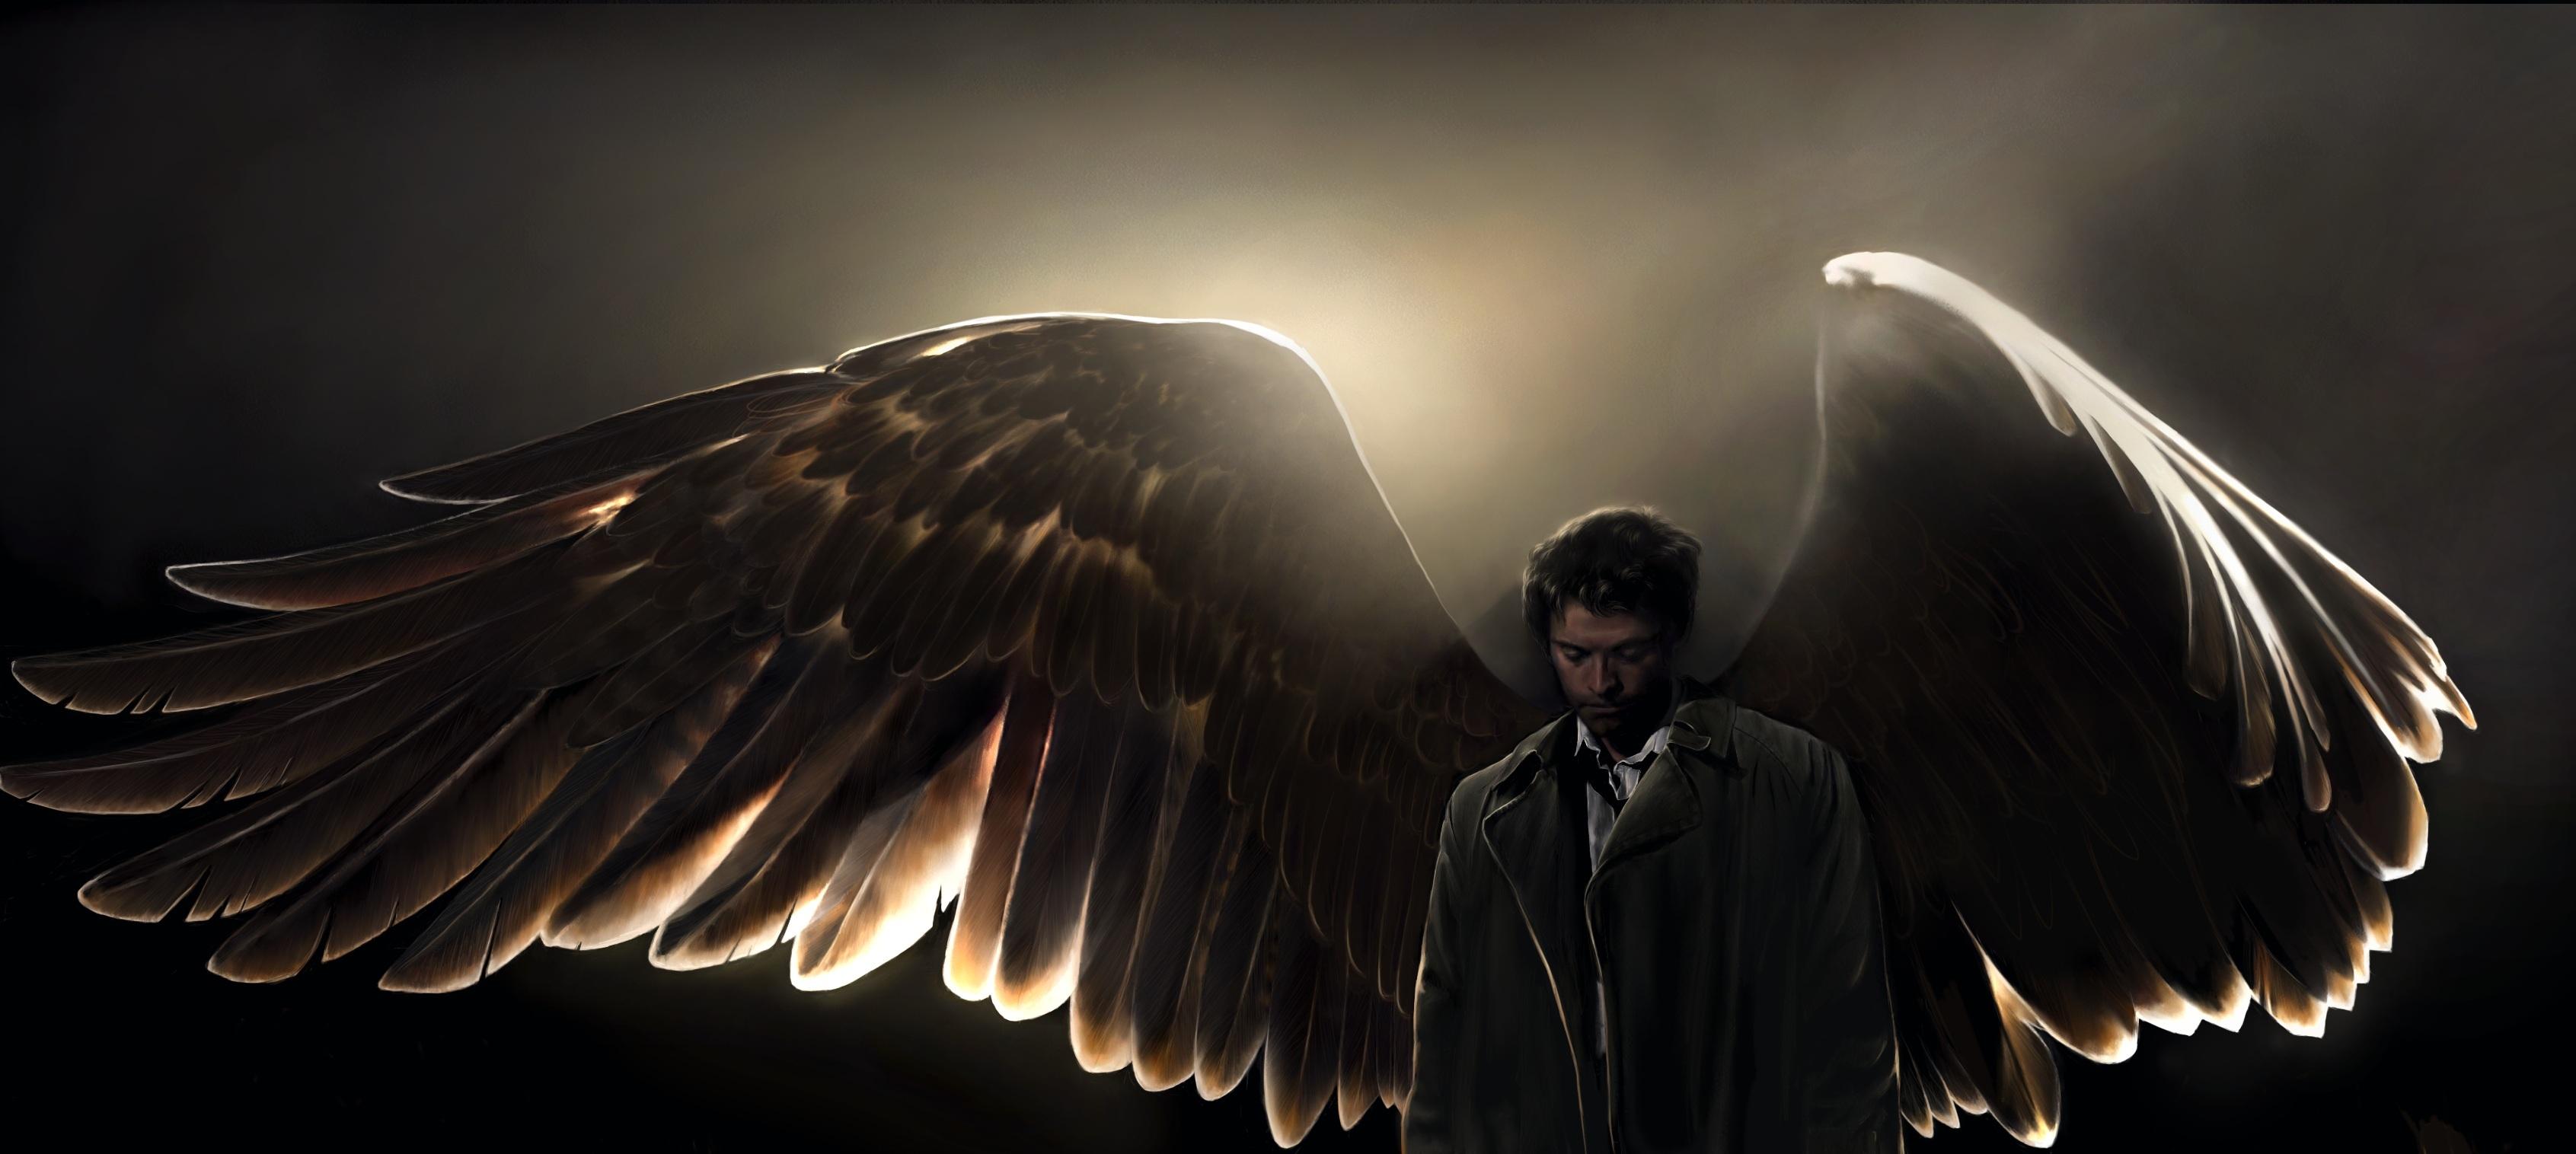 Wallpaper Supernatural Man Wings Castiel angel Movies 3383x1516